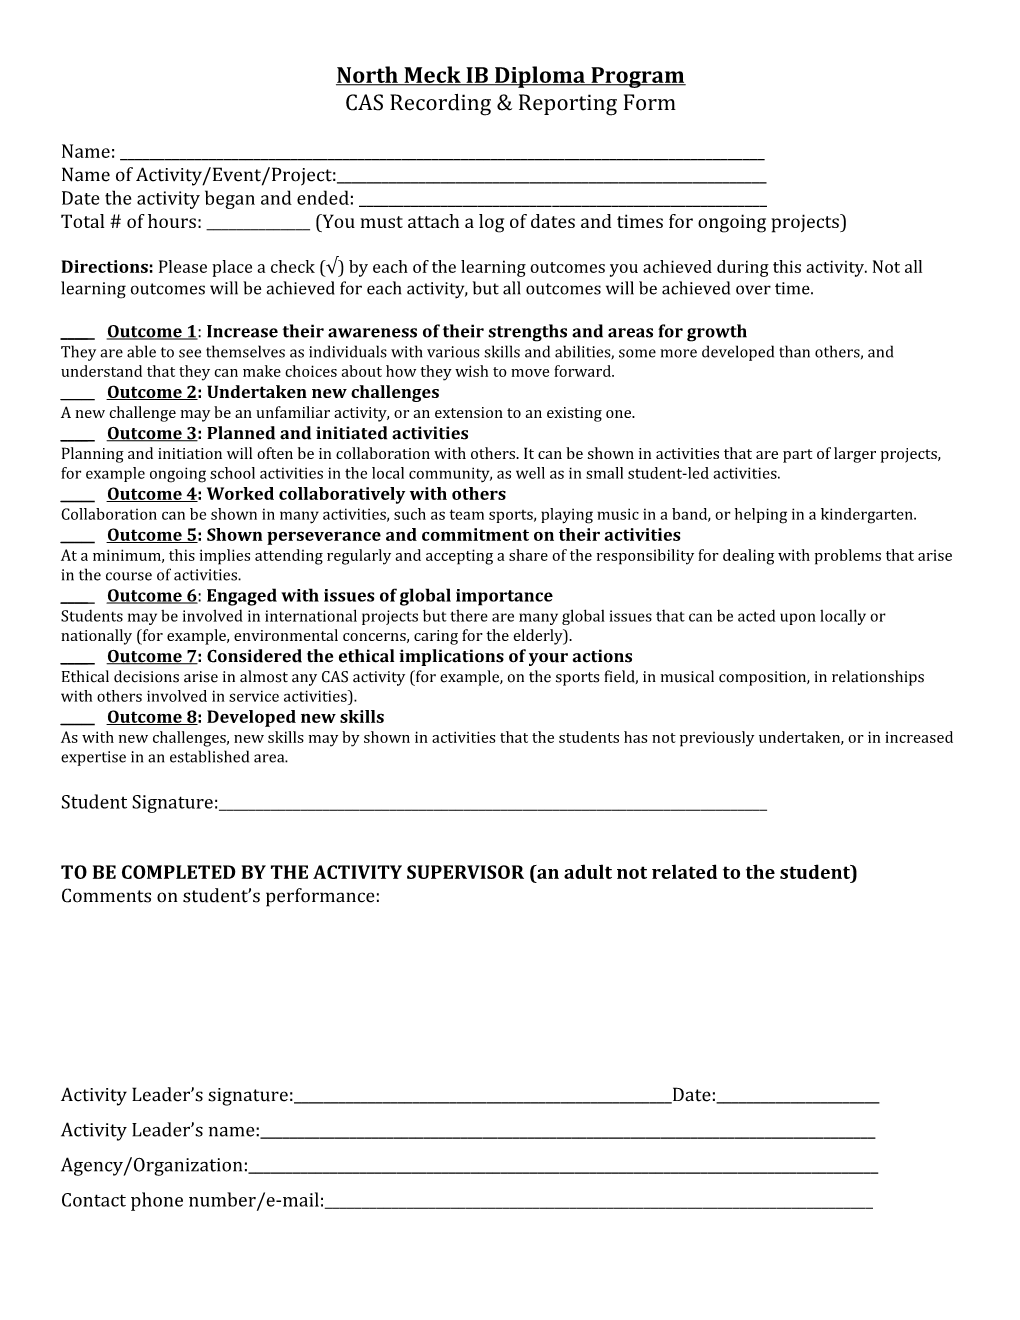 IB DP CAS Reflection Form